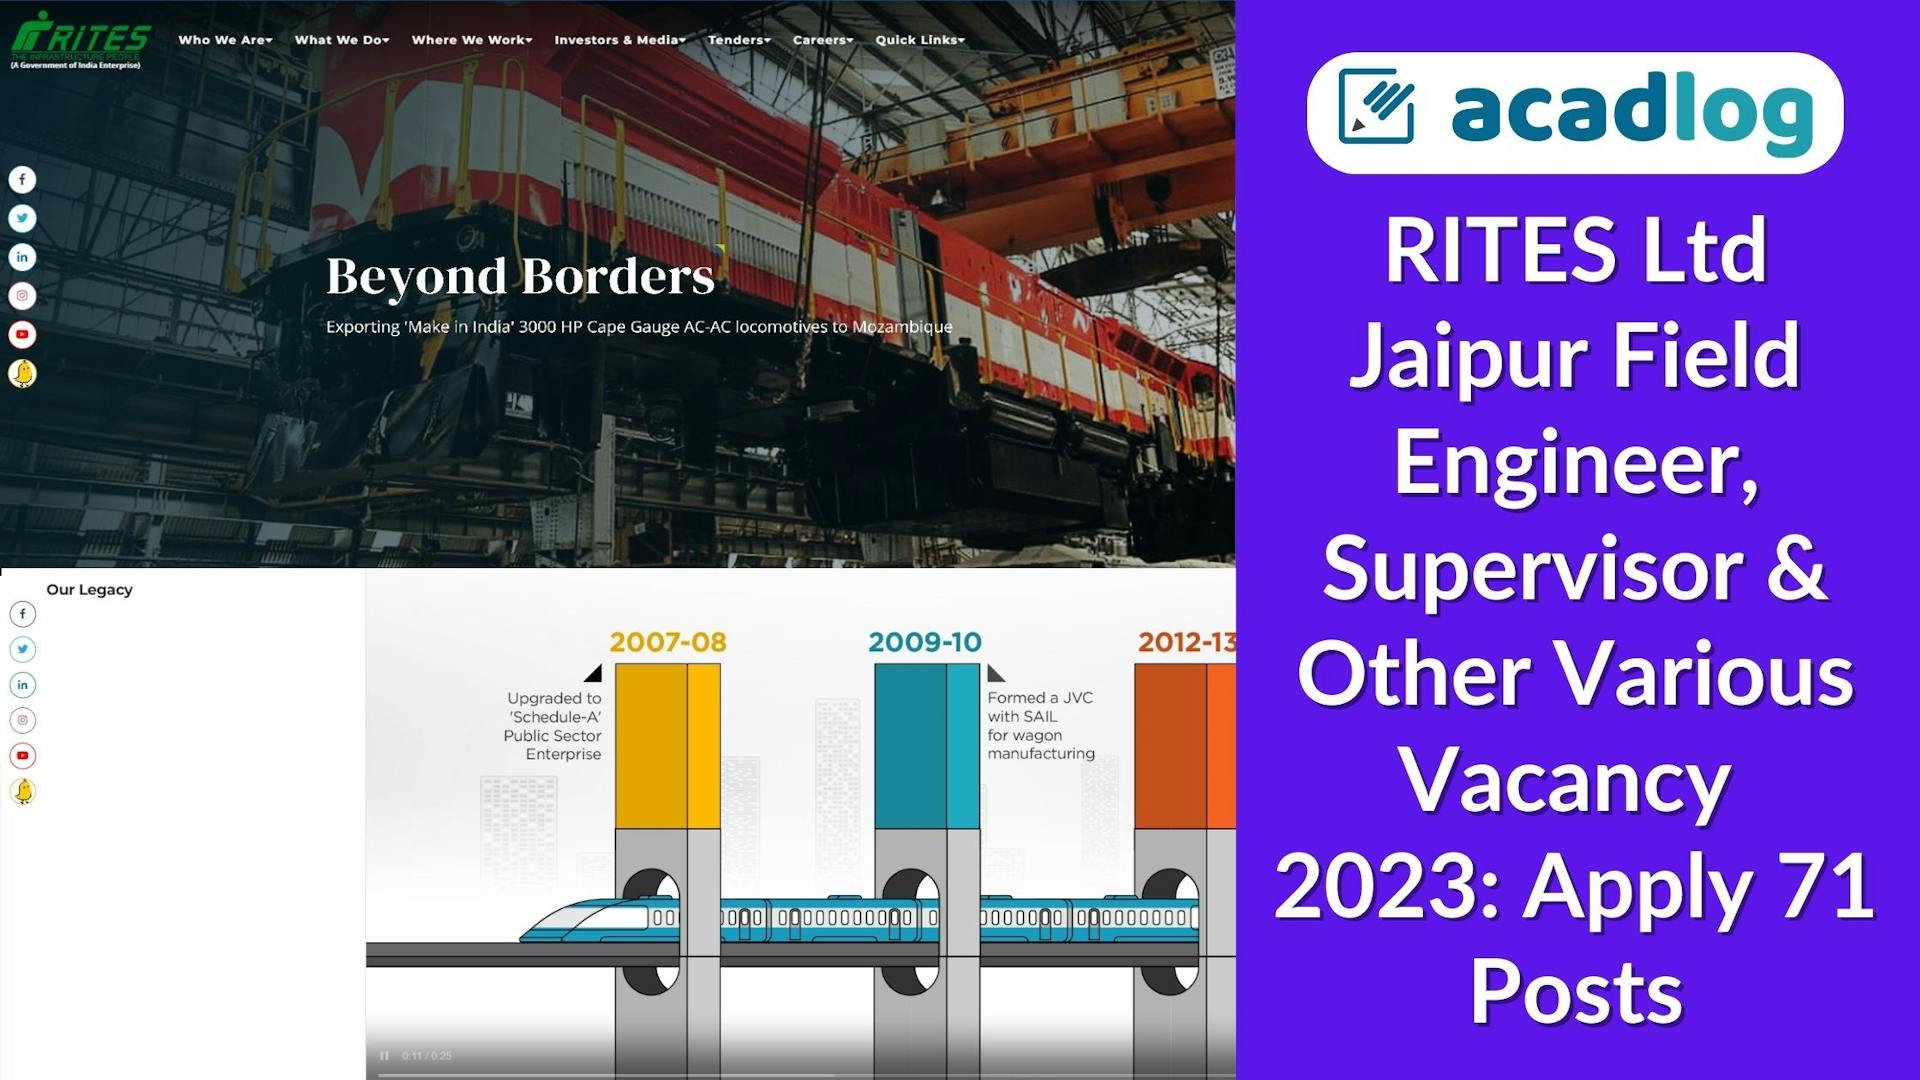 RITES Ltd Jaipur Field Engineer, Supervisor & Other Various Vacancy 2023: Apply 71 Posts